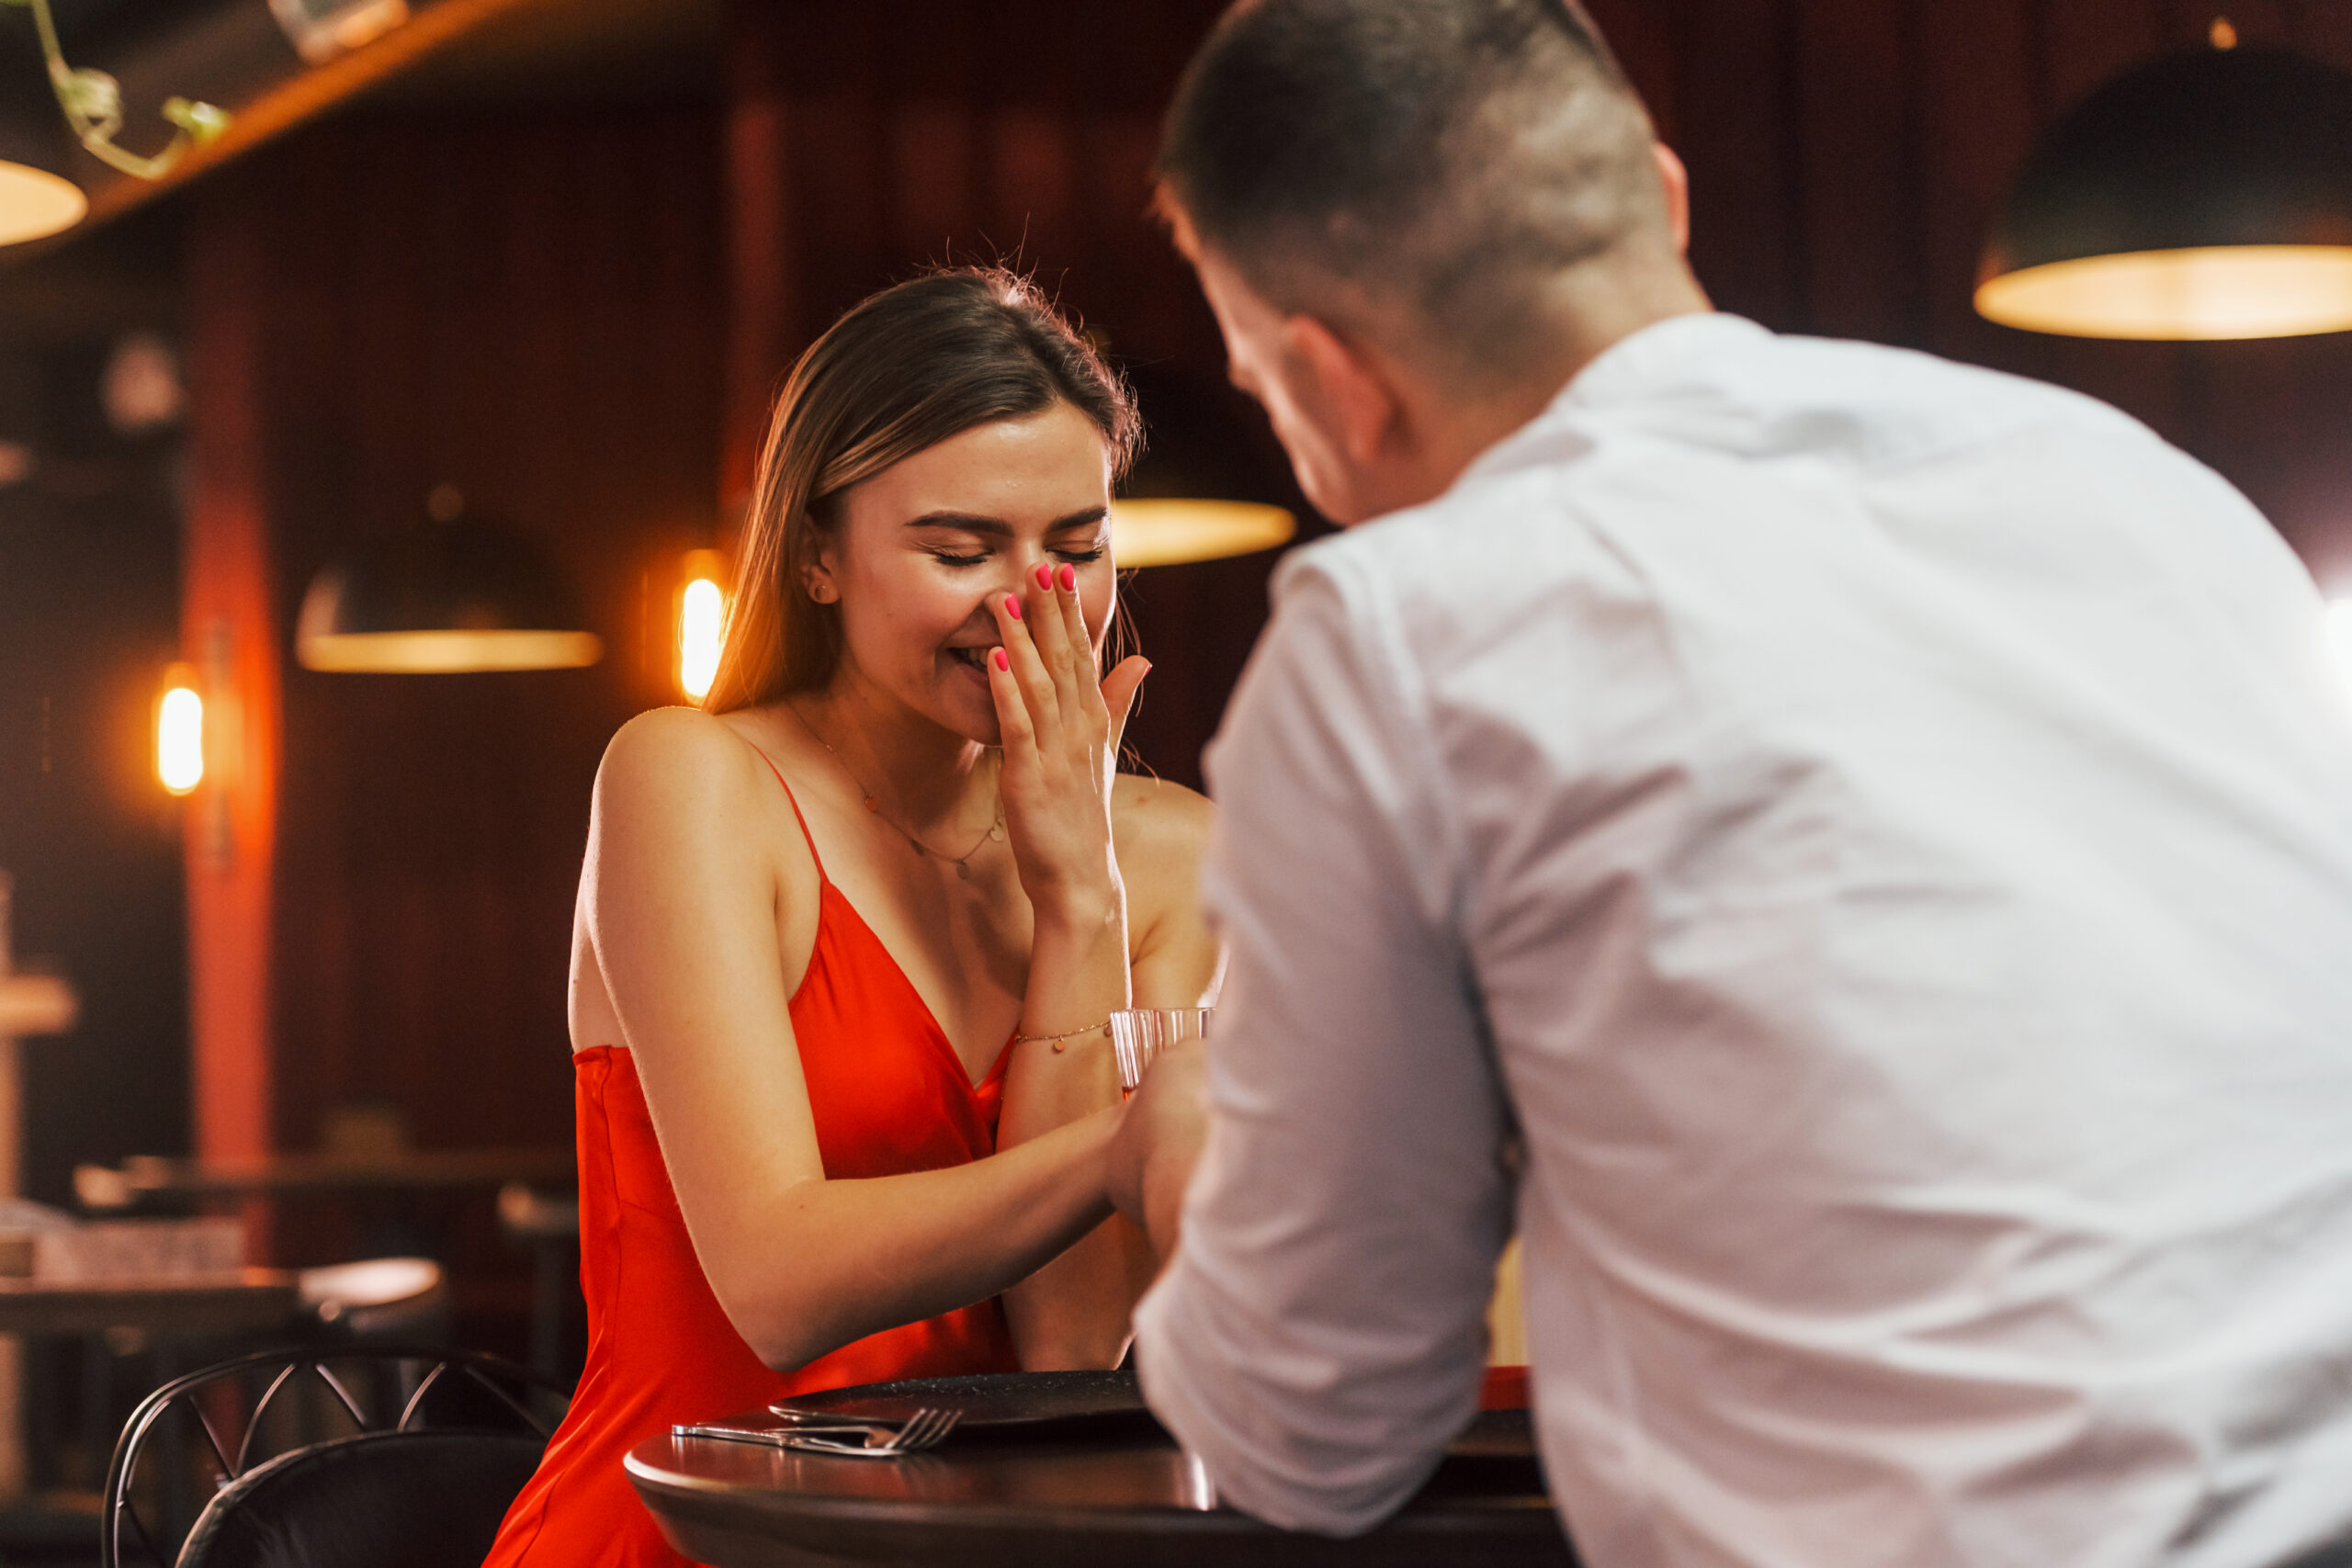 Mann macht seiner Freundin einen Heiratsantrag an Silvester im Restaurant